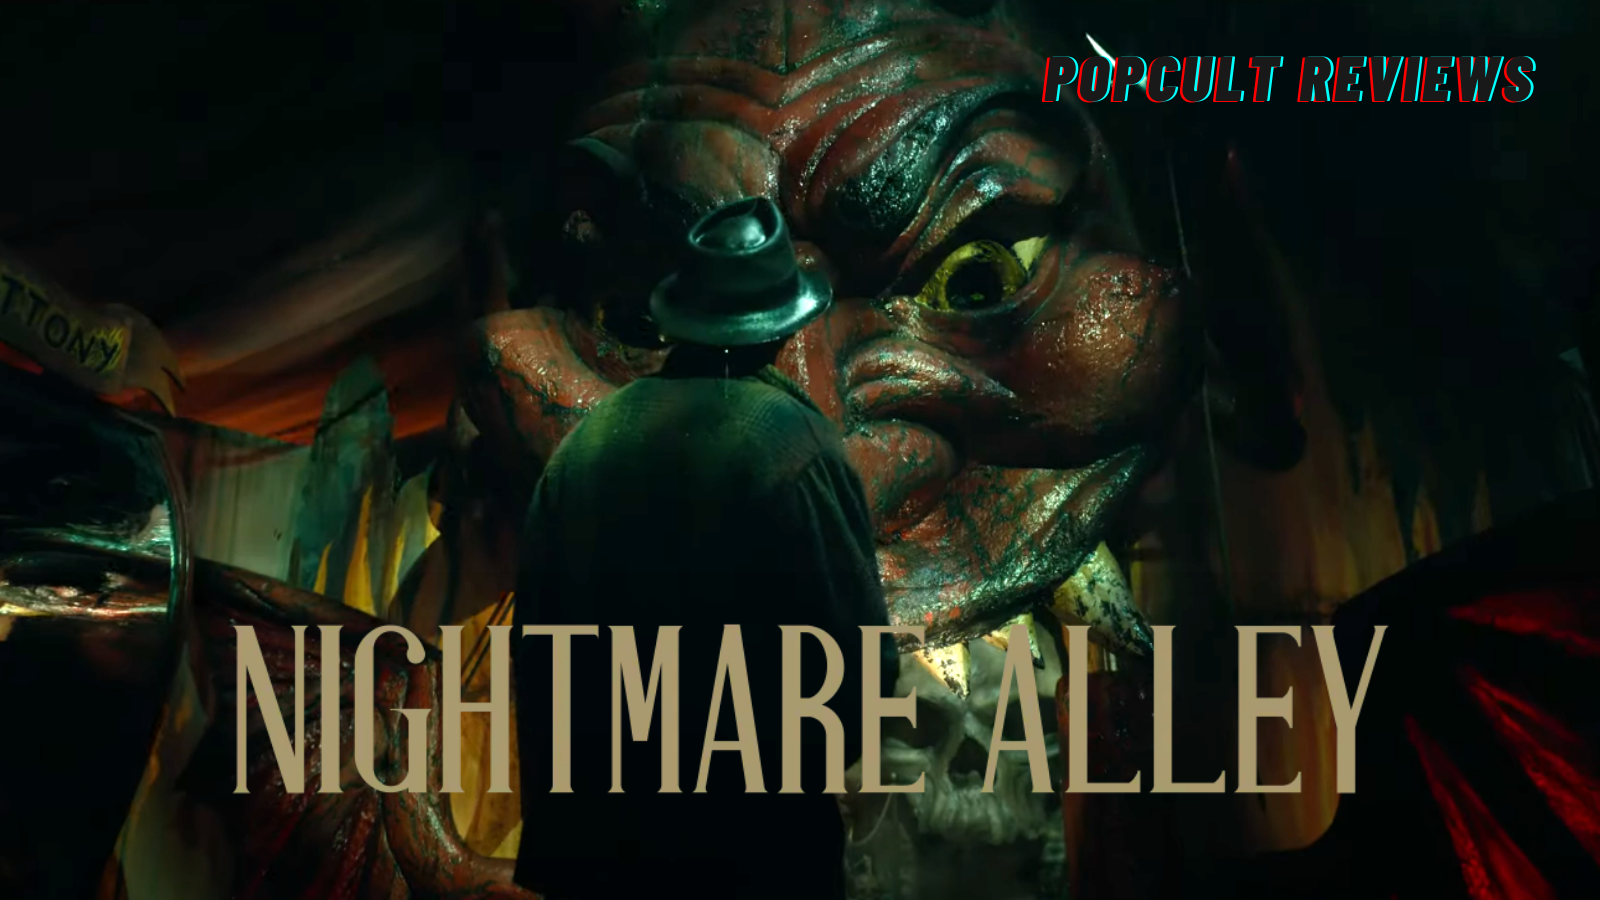 Nightmare Alley 4K Movie Poster Wallpapers